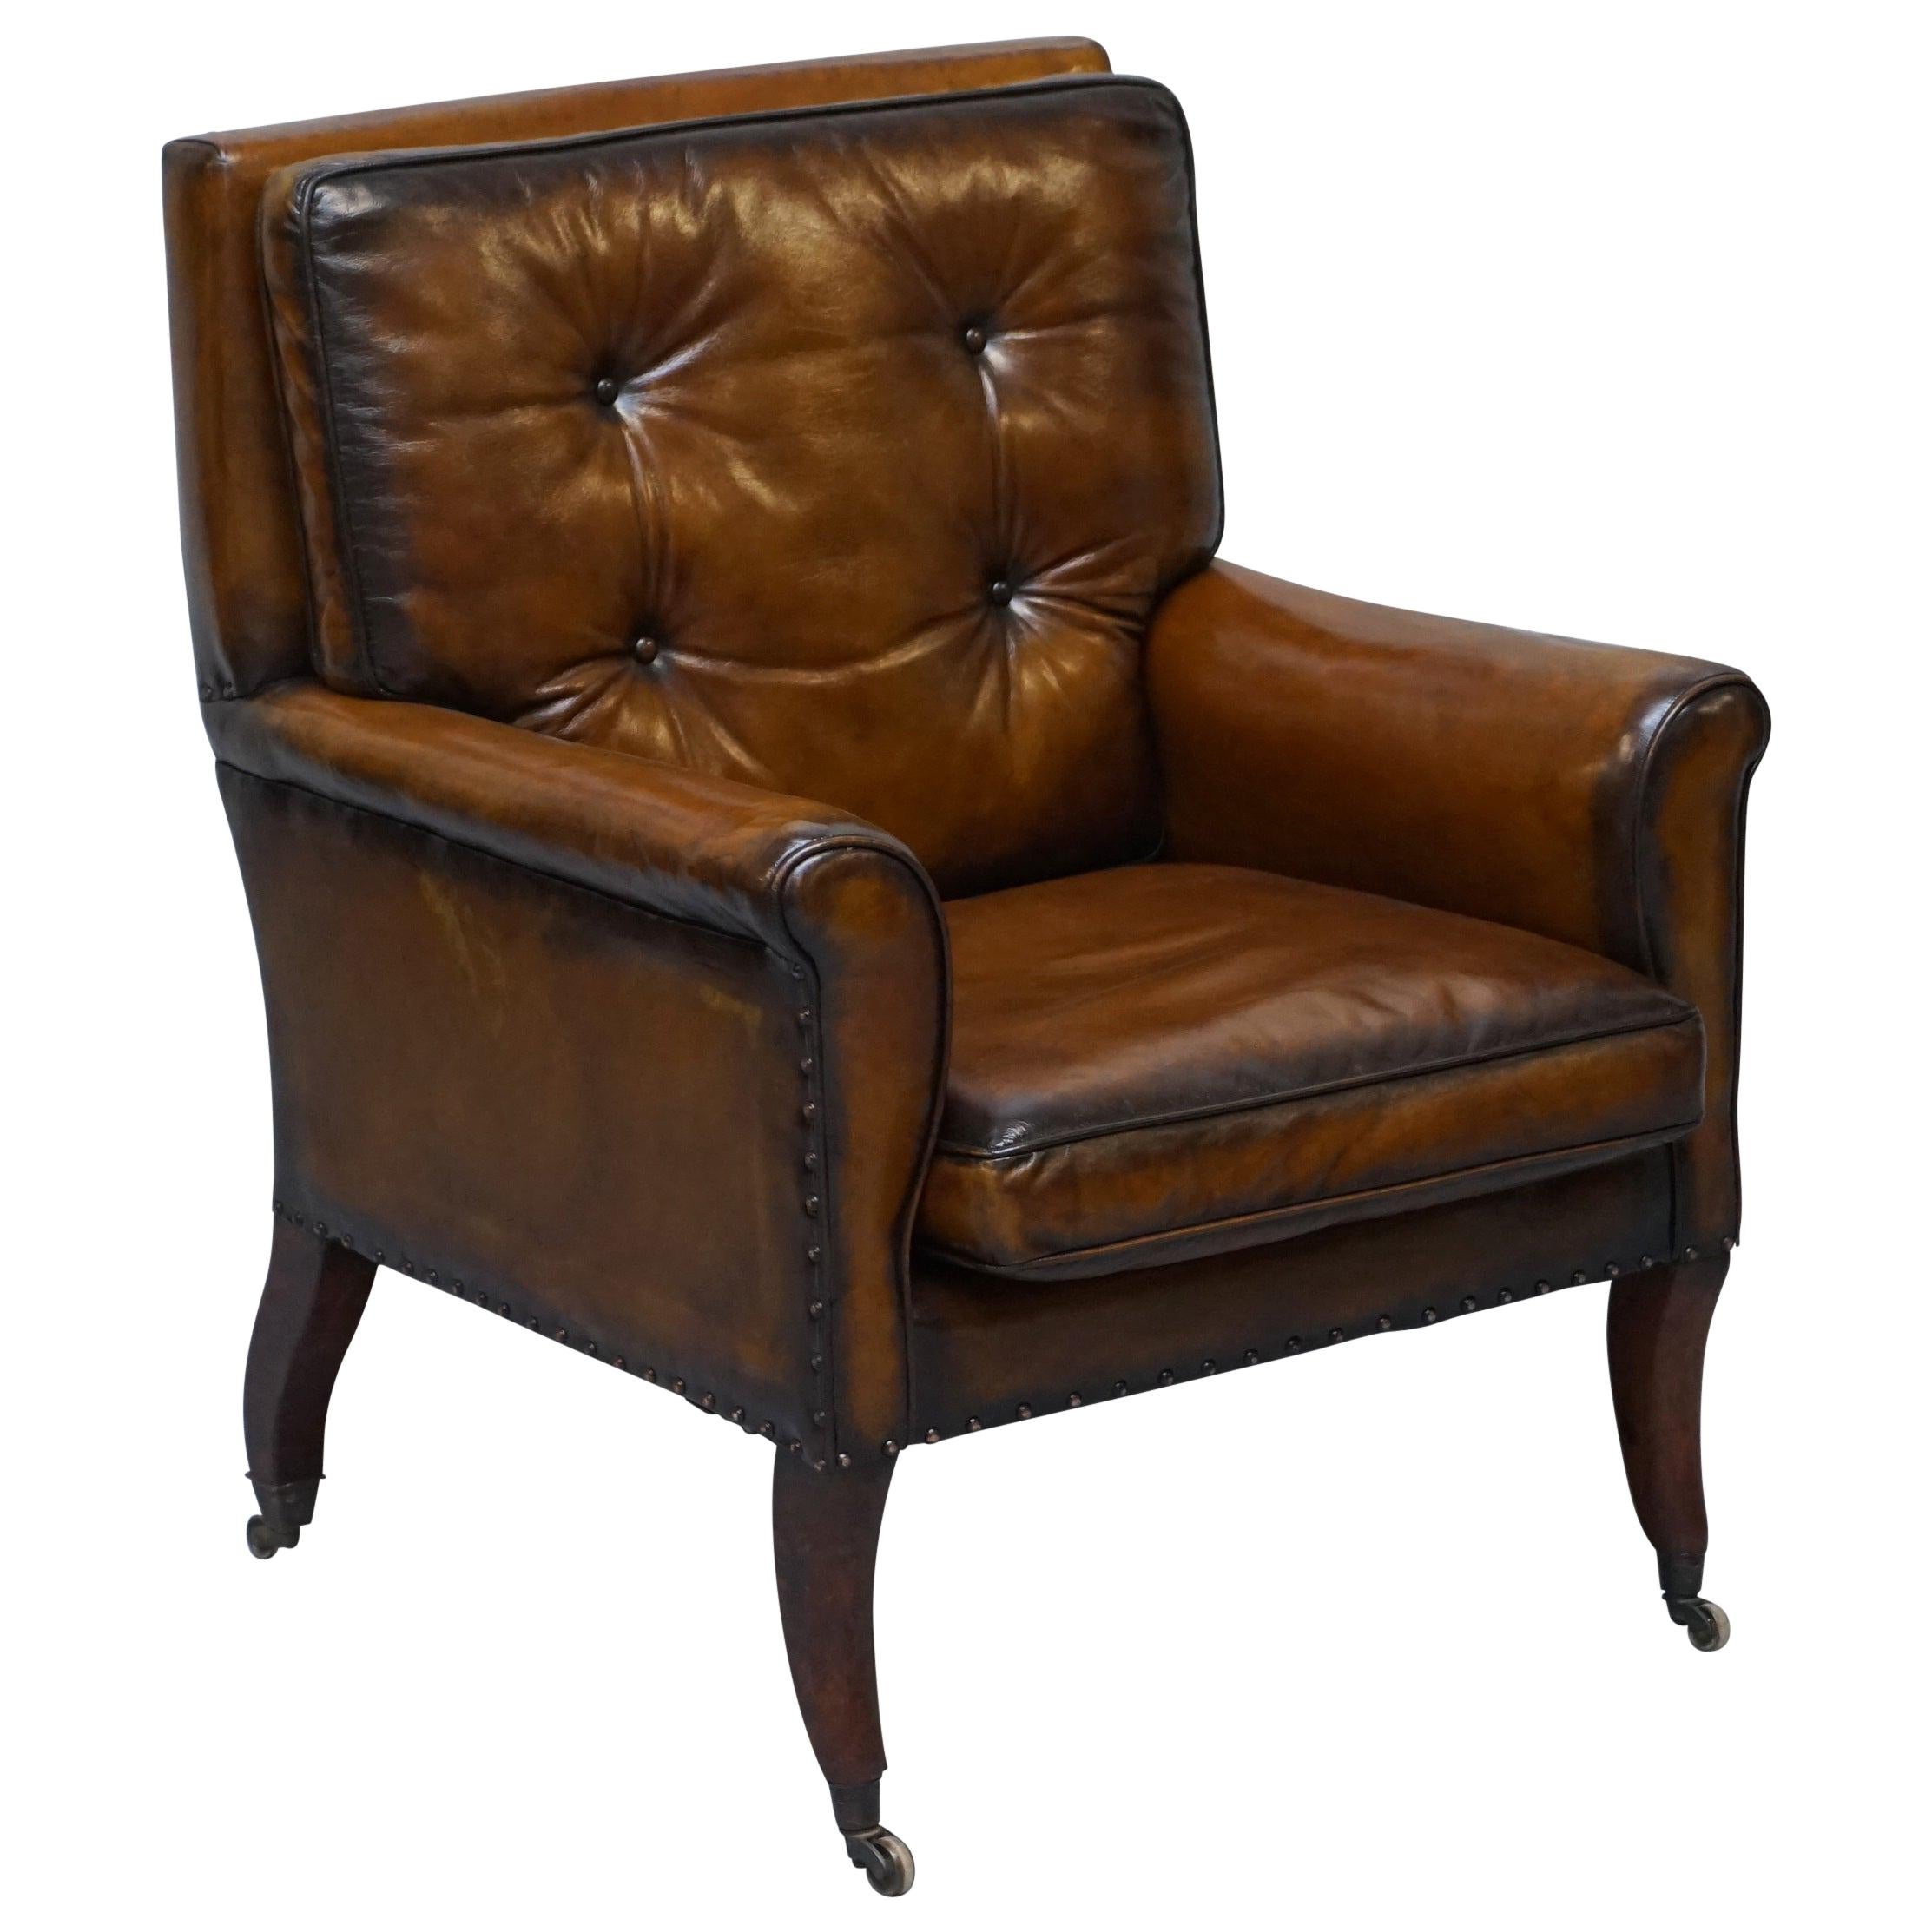 Original Regency circa 1810 Hand Dyed Brown Leather Gentleman's Club Armchair